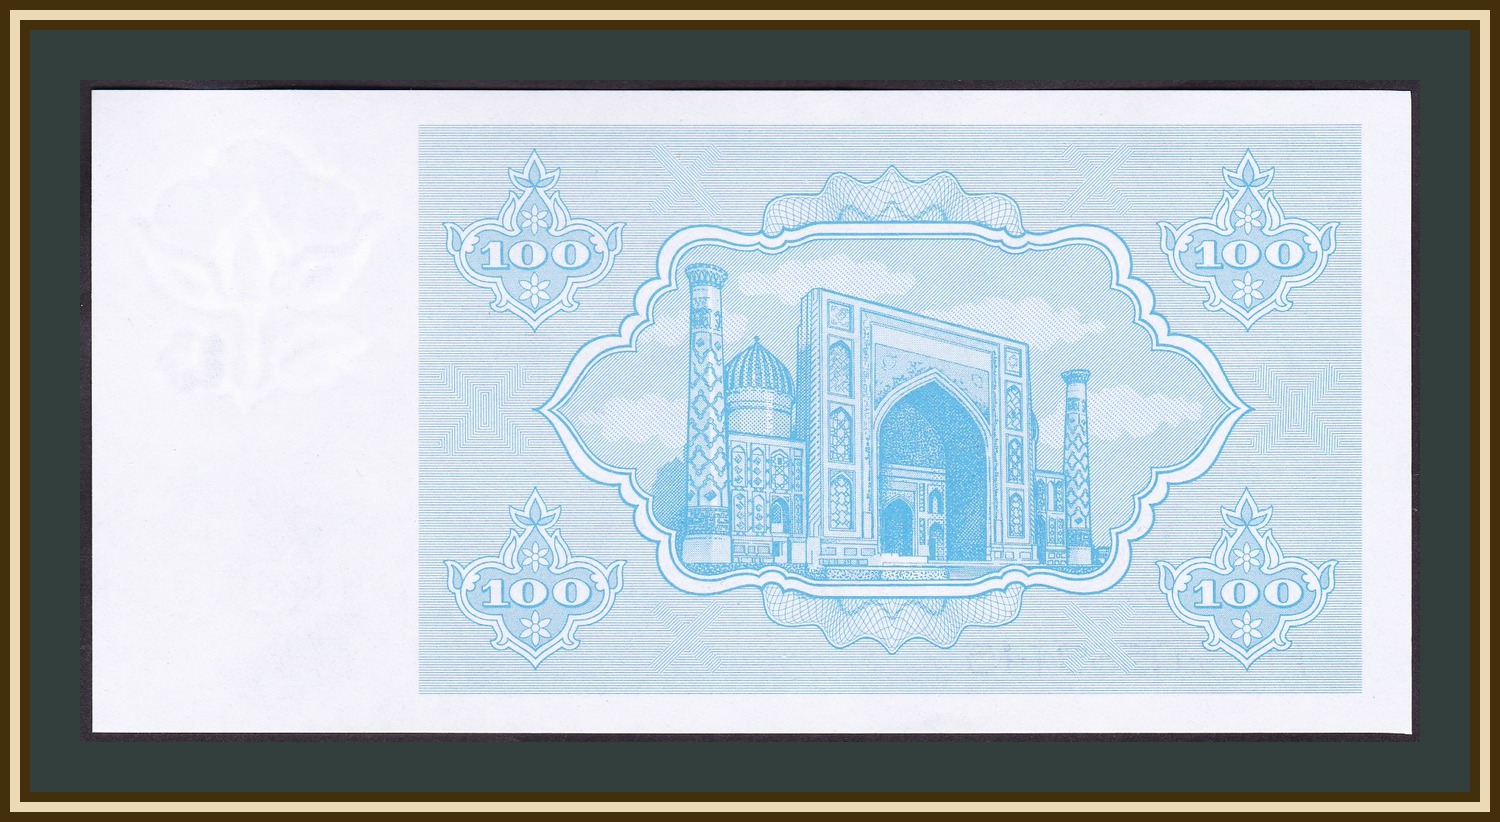 100 долларов в сум узбекистан. Банкноты Узбекистан 1998.